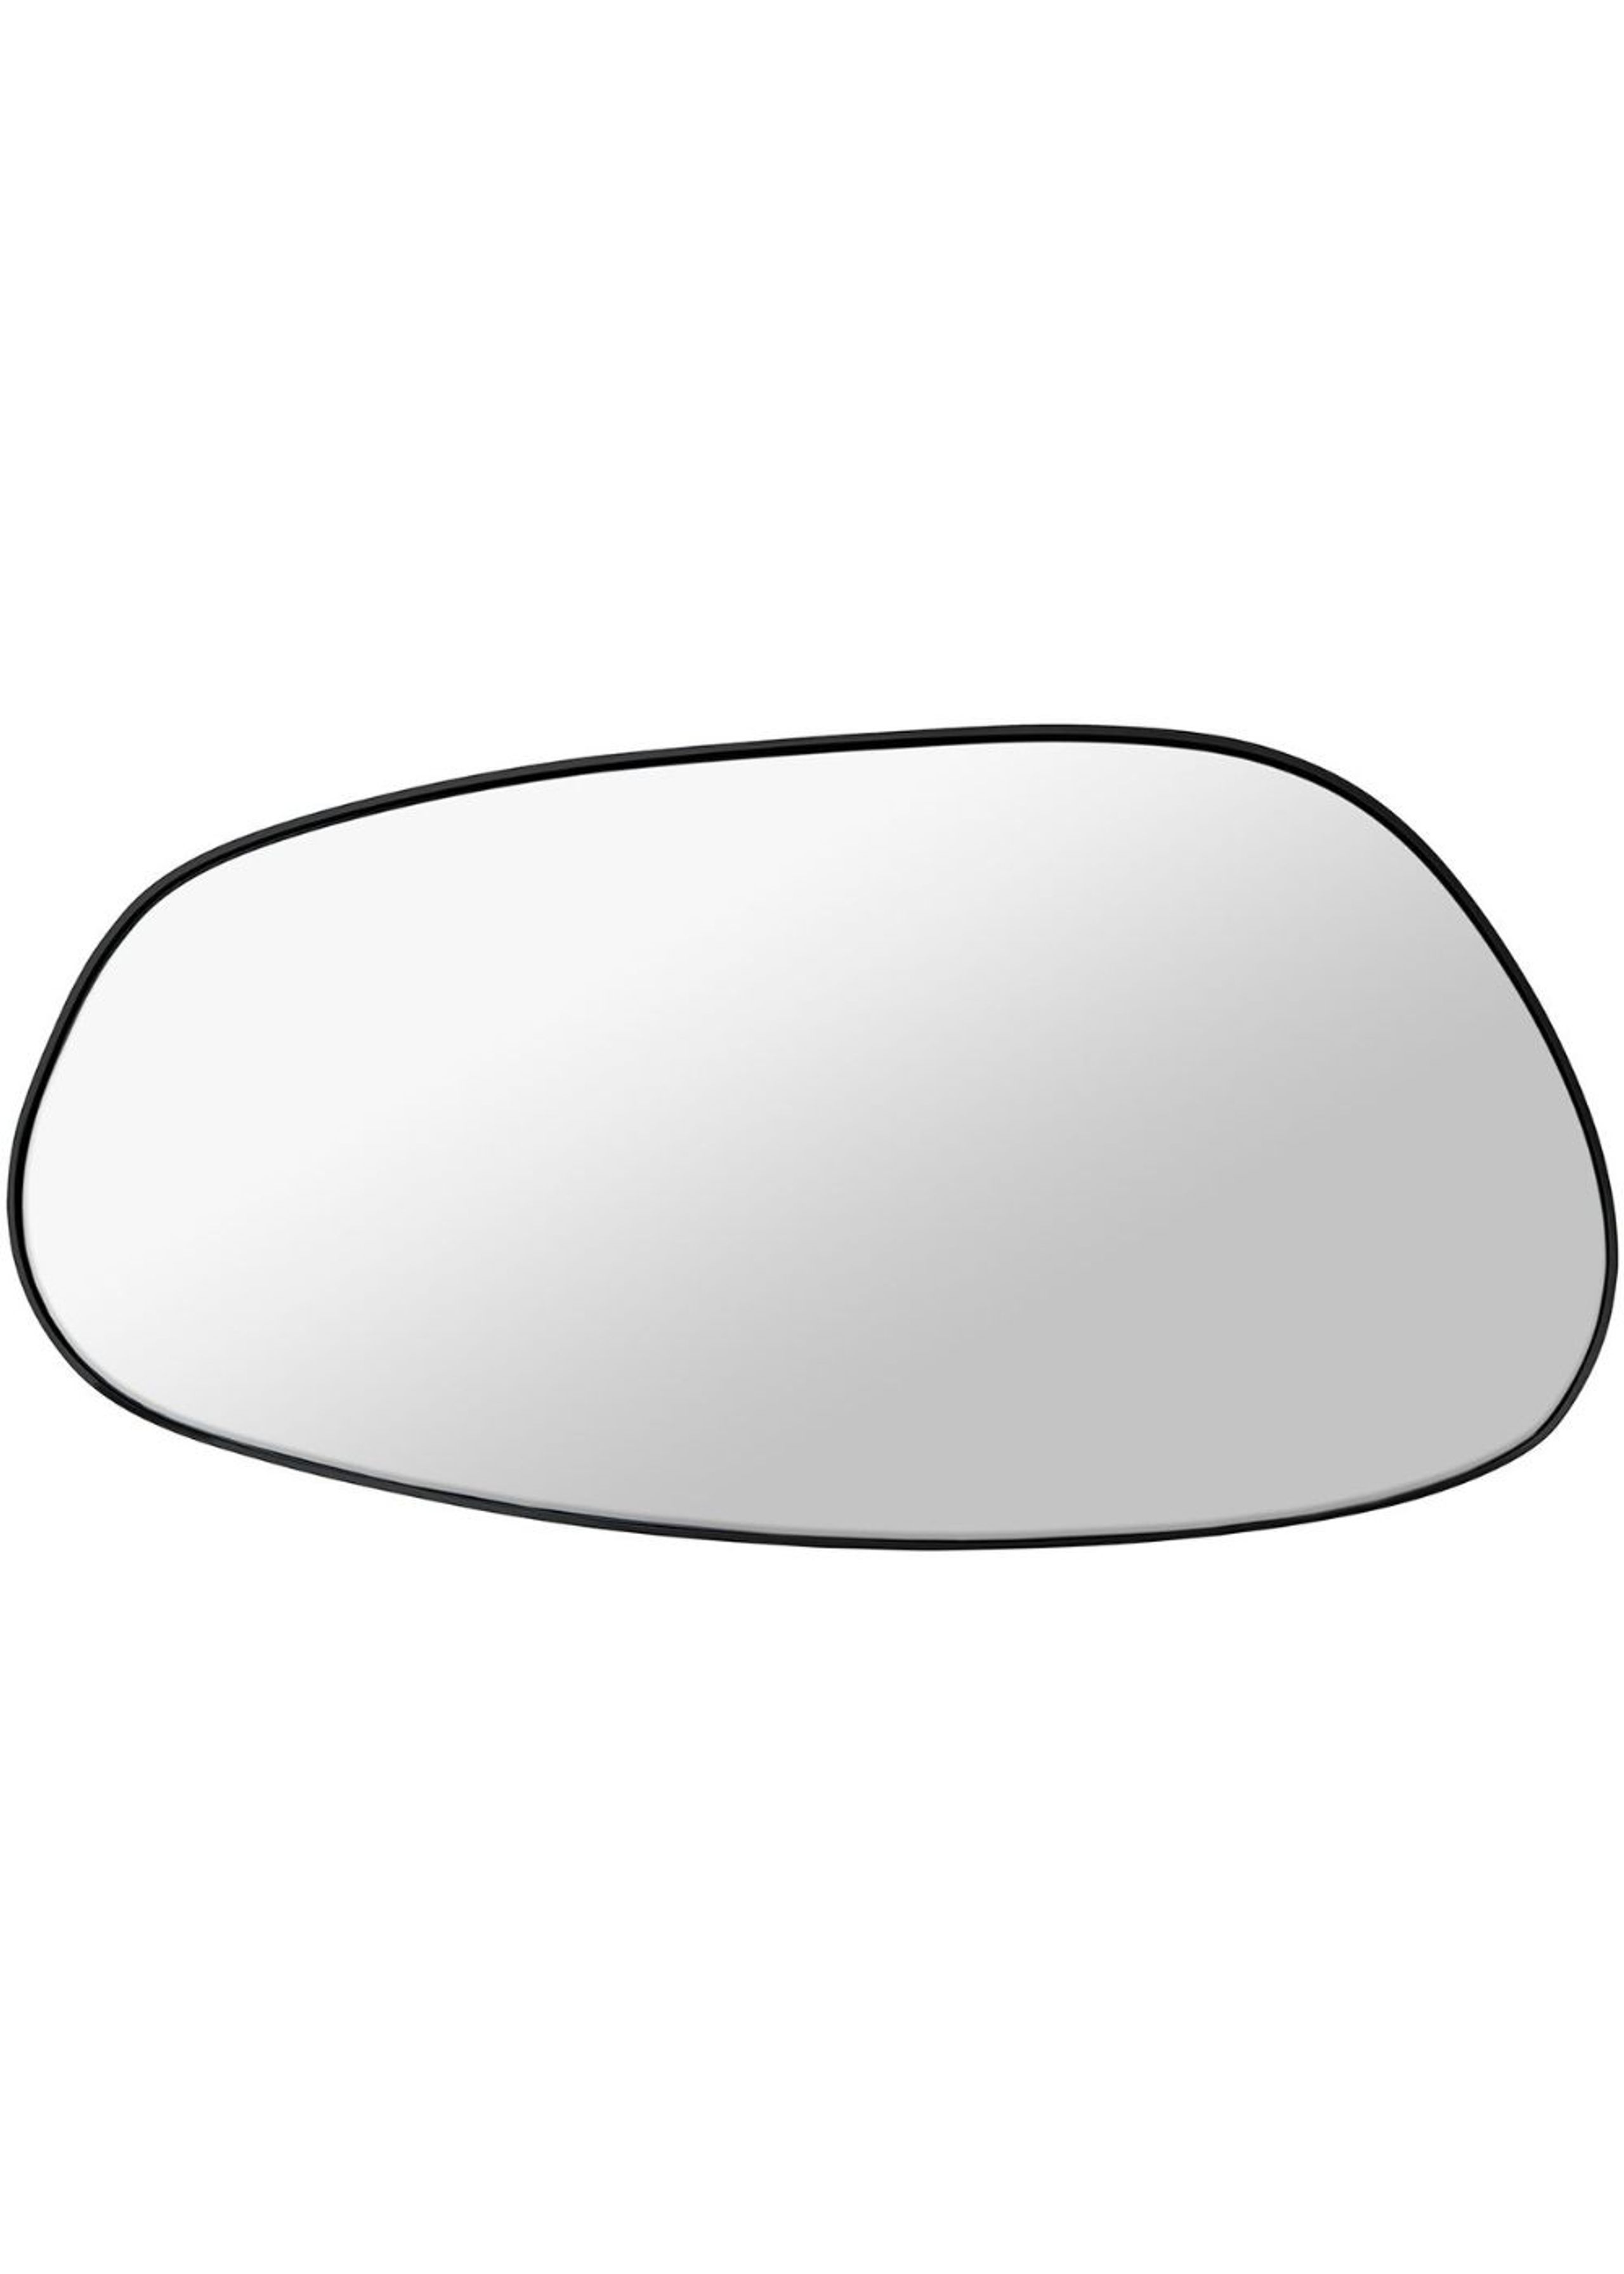 Mette Ditmer - Mirror - FIGURA Mirror, large  - Black - Large